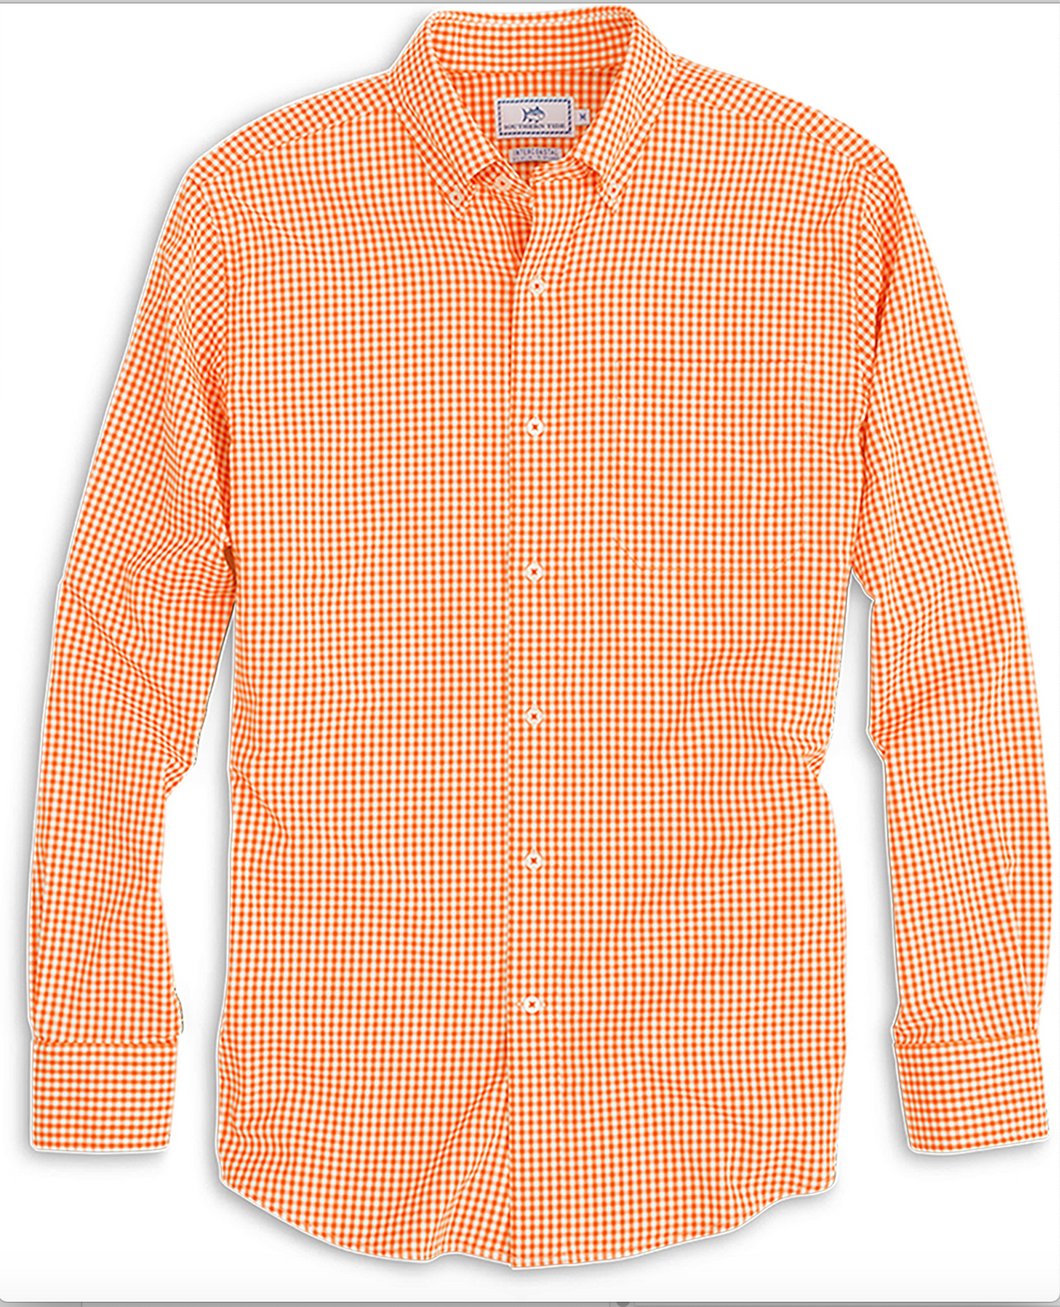 Southern Tide Intercoastal Sport Shirt Gingham EndZone Orange